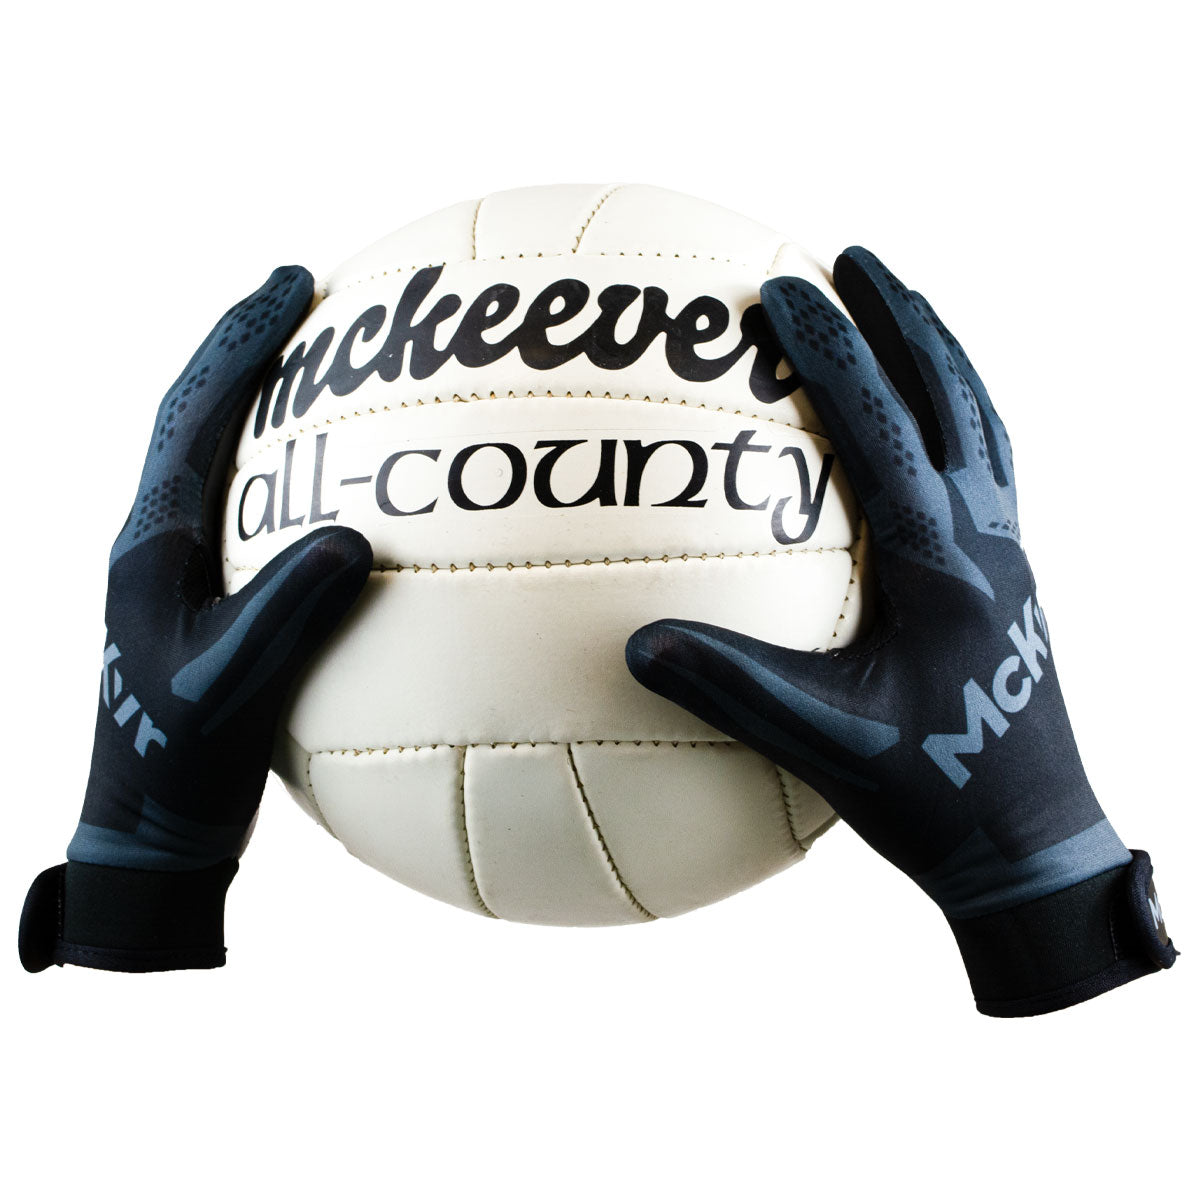 Mc Keever 2.0 Gaelic Gloves - Youth - Black/Black